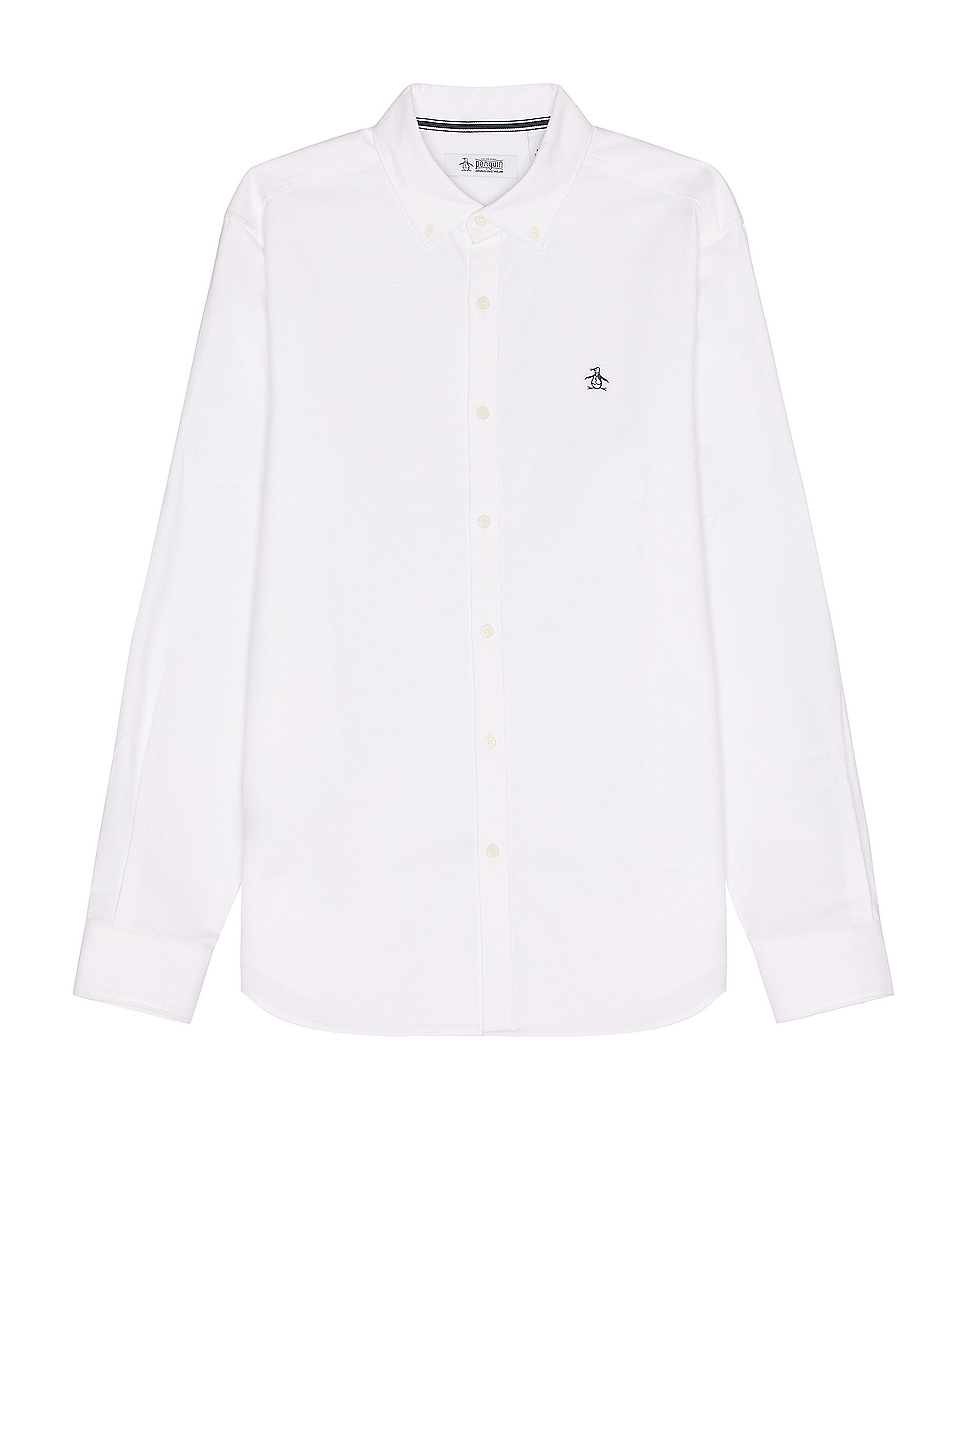 Genuine Polo Ralph Lauren Womens Classic Fit Oxford Shirt -Blue